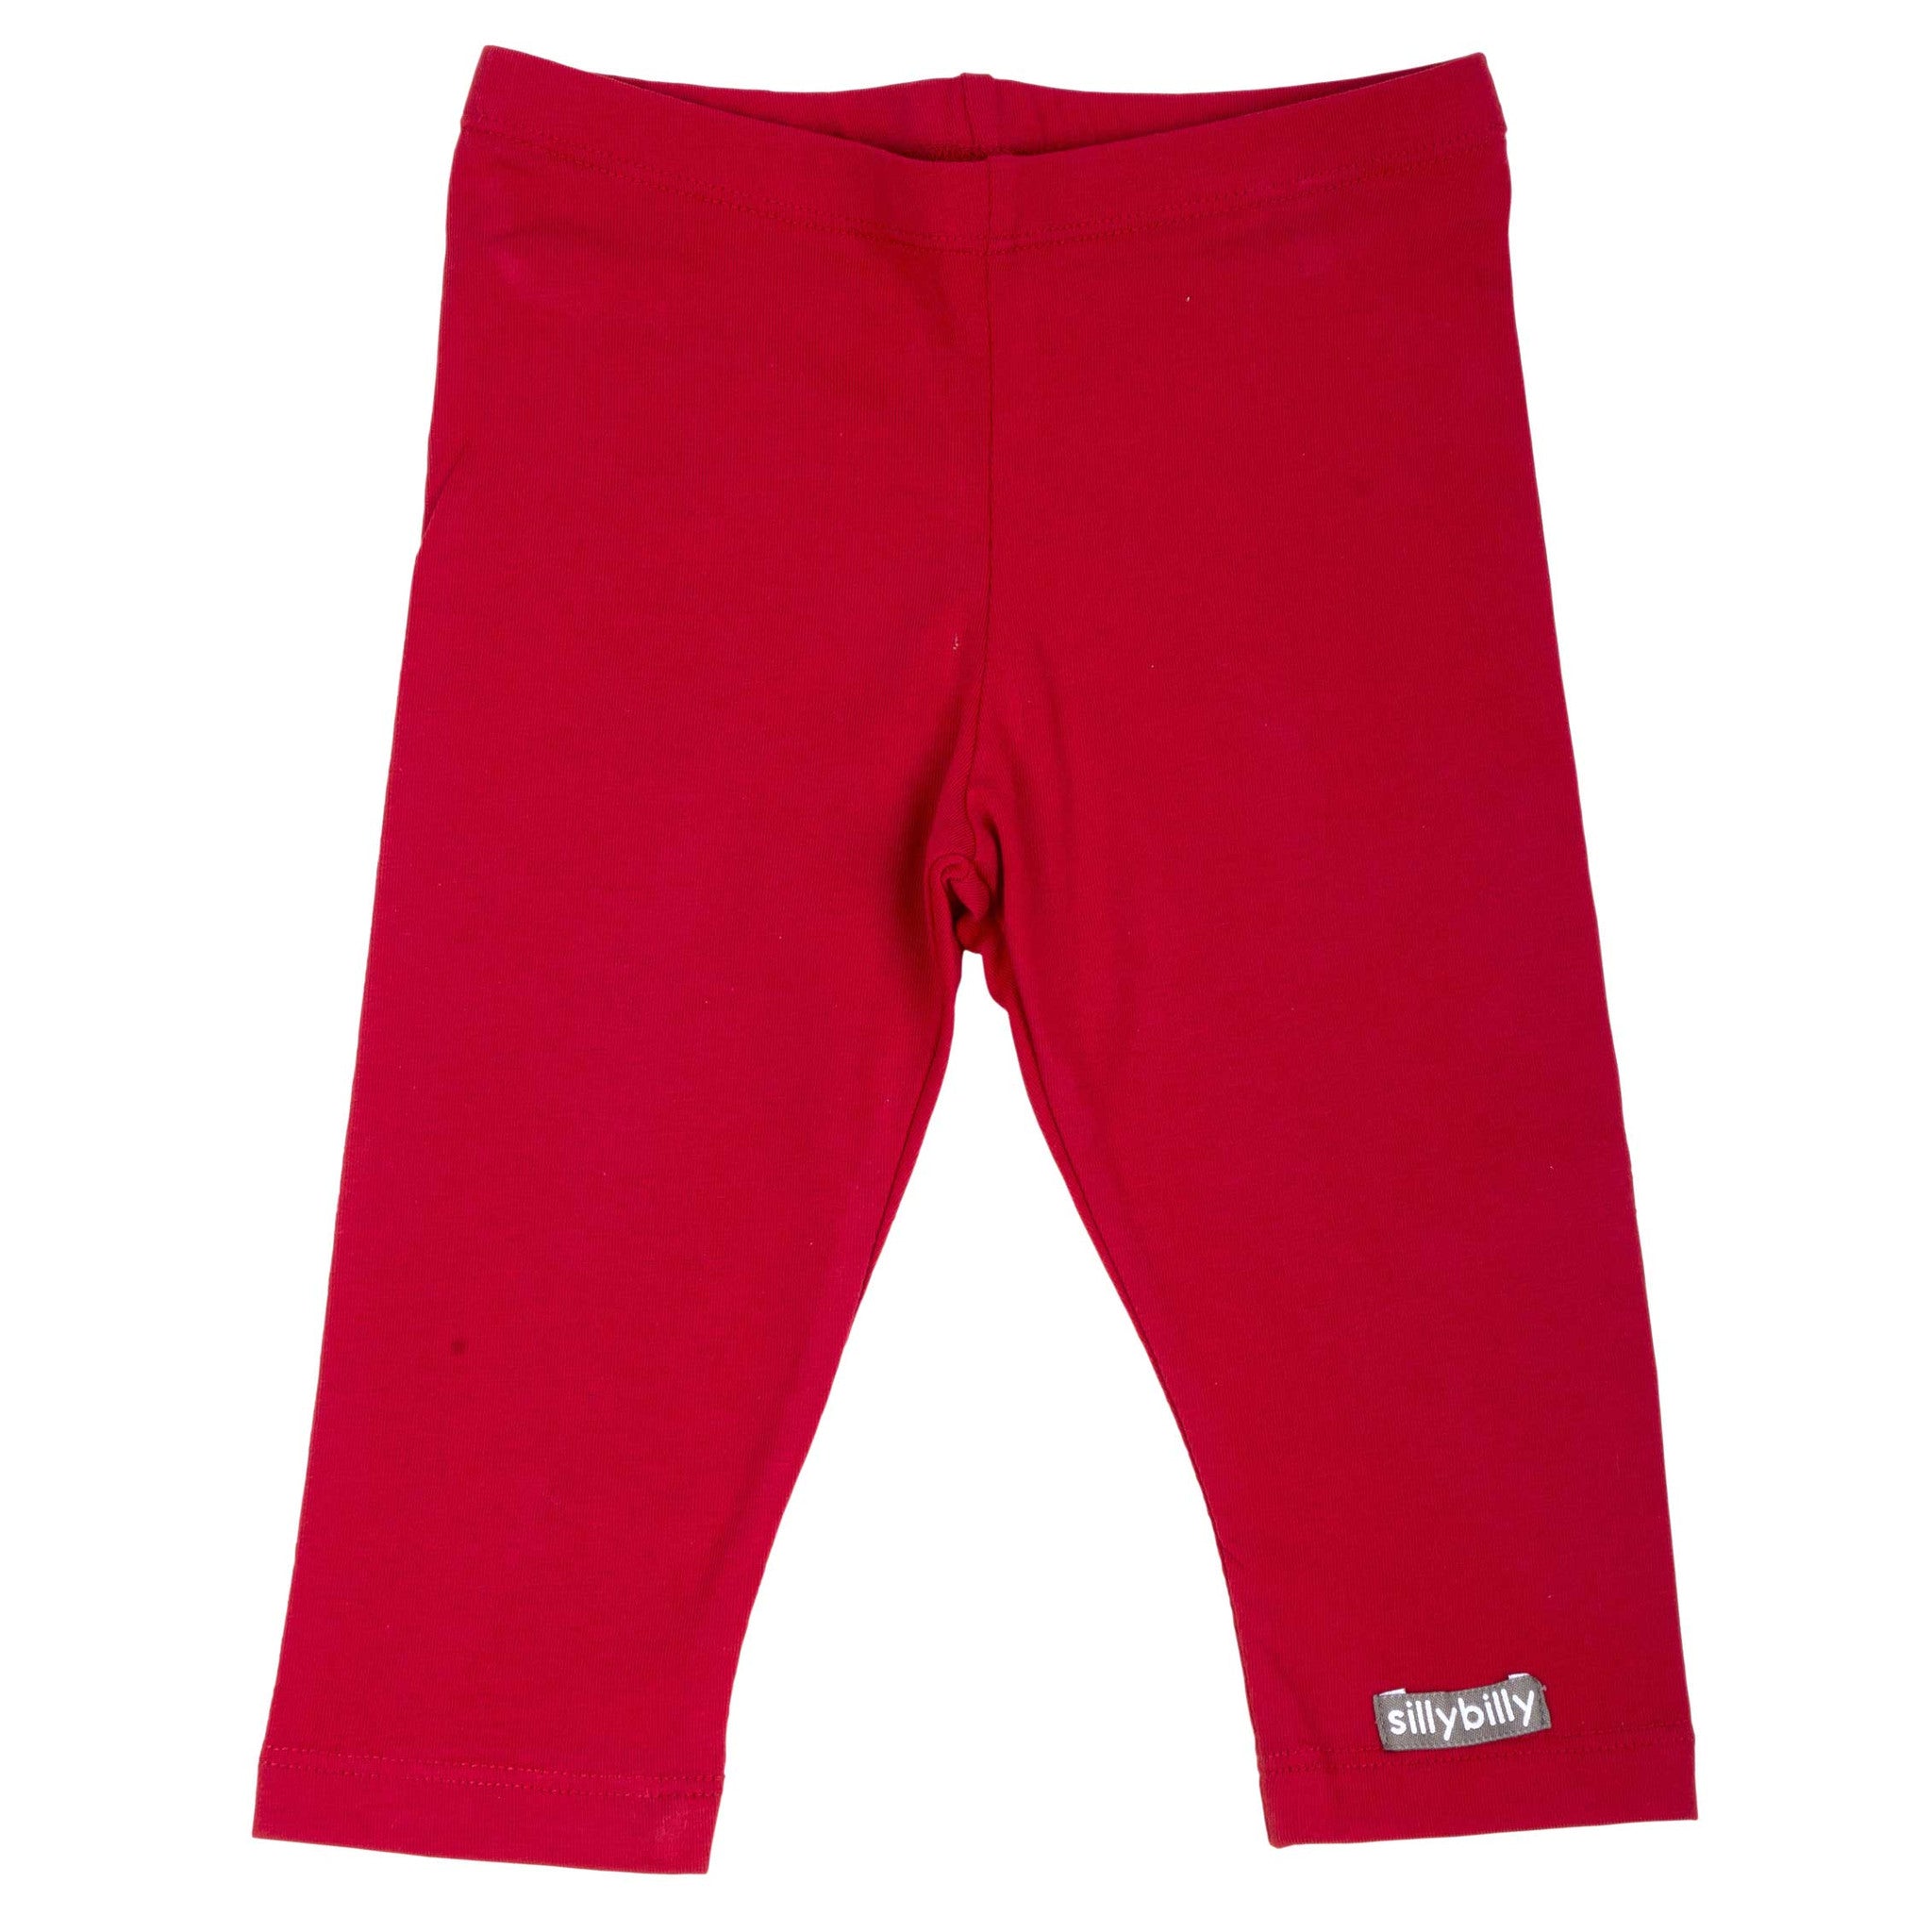 Red cropped leggings